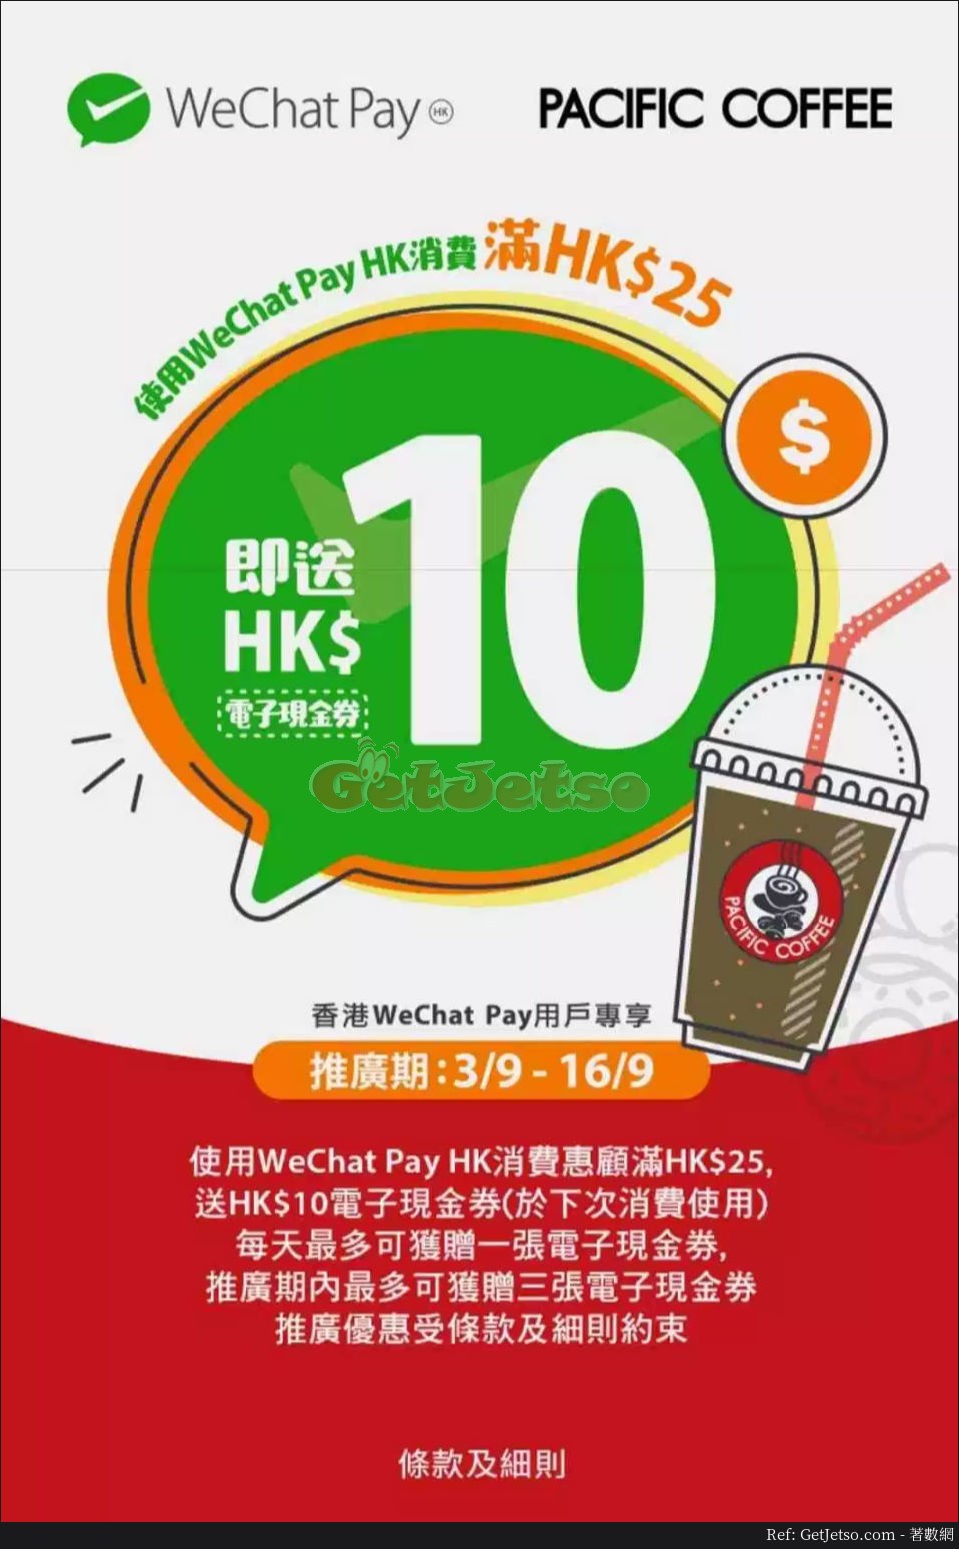 WeChat Pay HK x Pacific Coffee 消費滿送電子現金券優惠(18年9月3-16日)圖片1